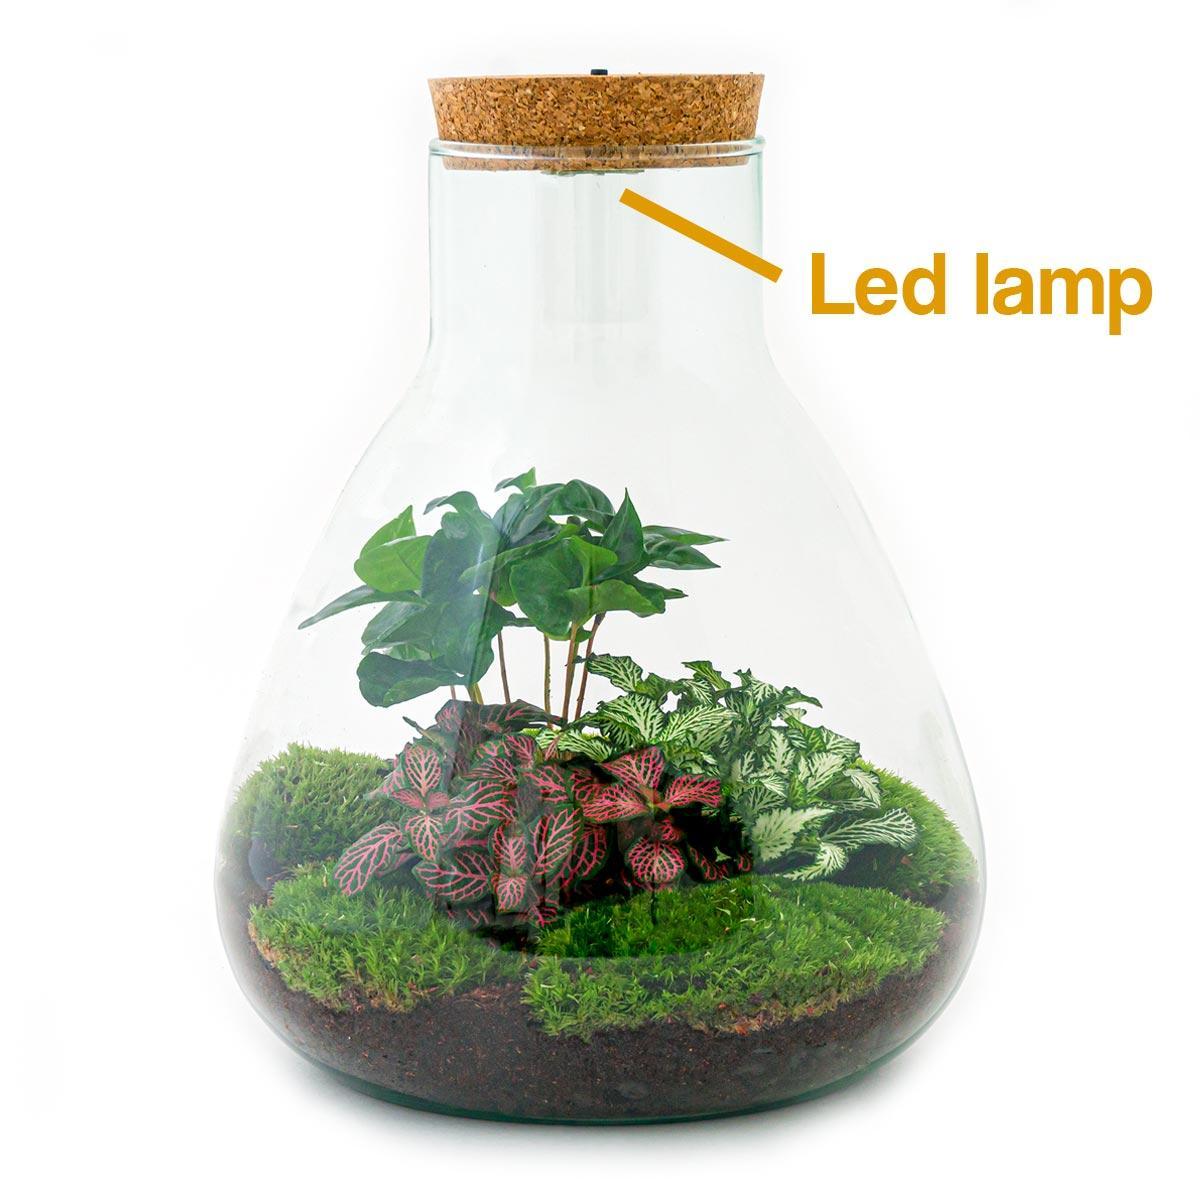 DIY terrarium - Sam Coffea met lamp - ↕ 30 cm - Rake + Shovel